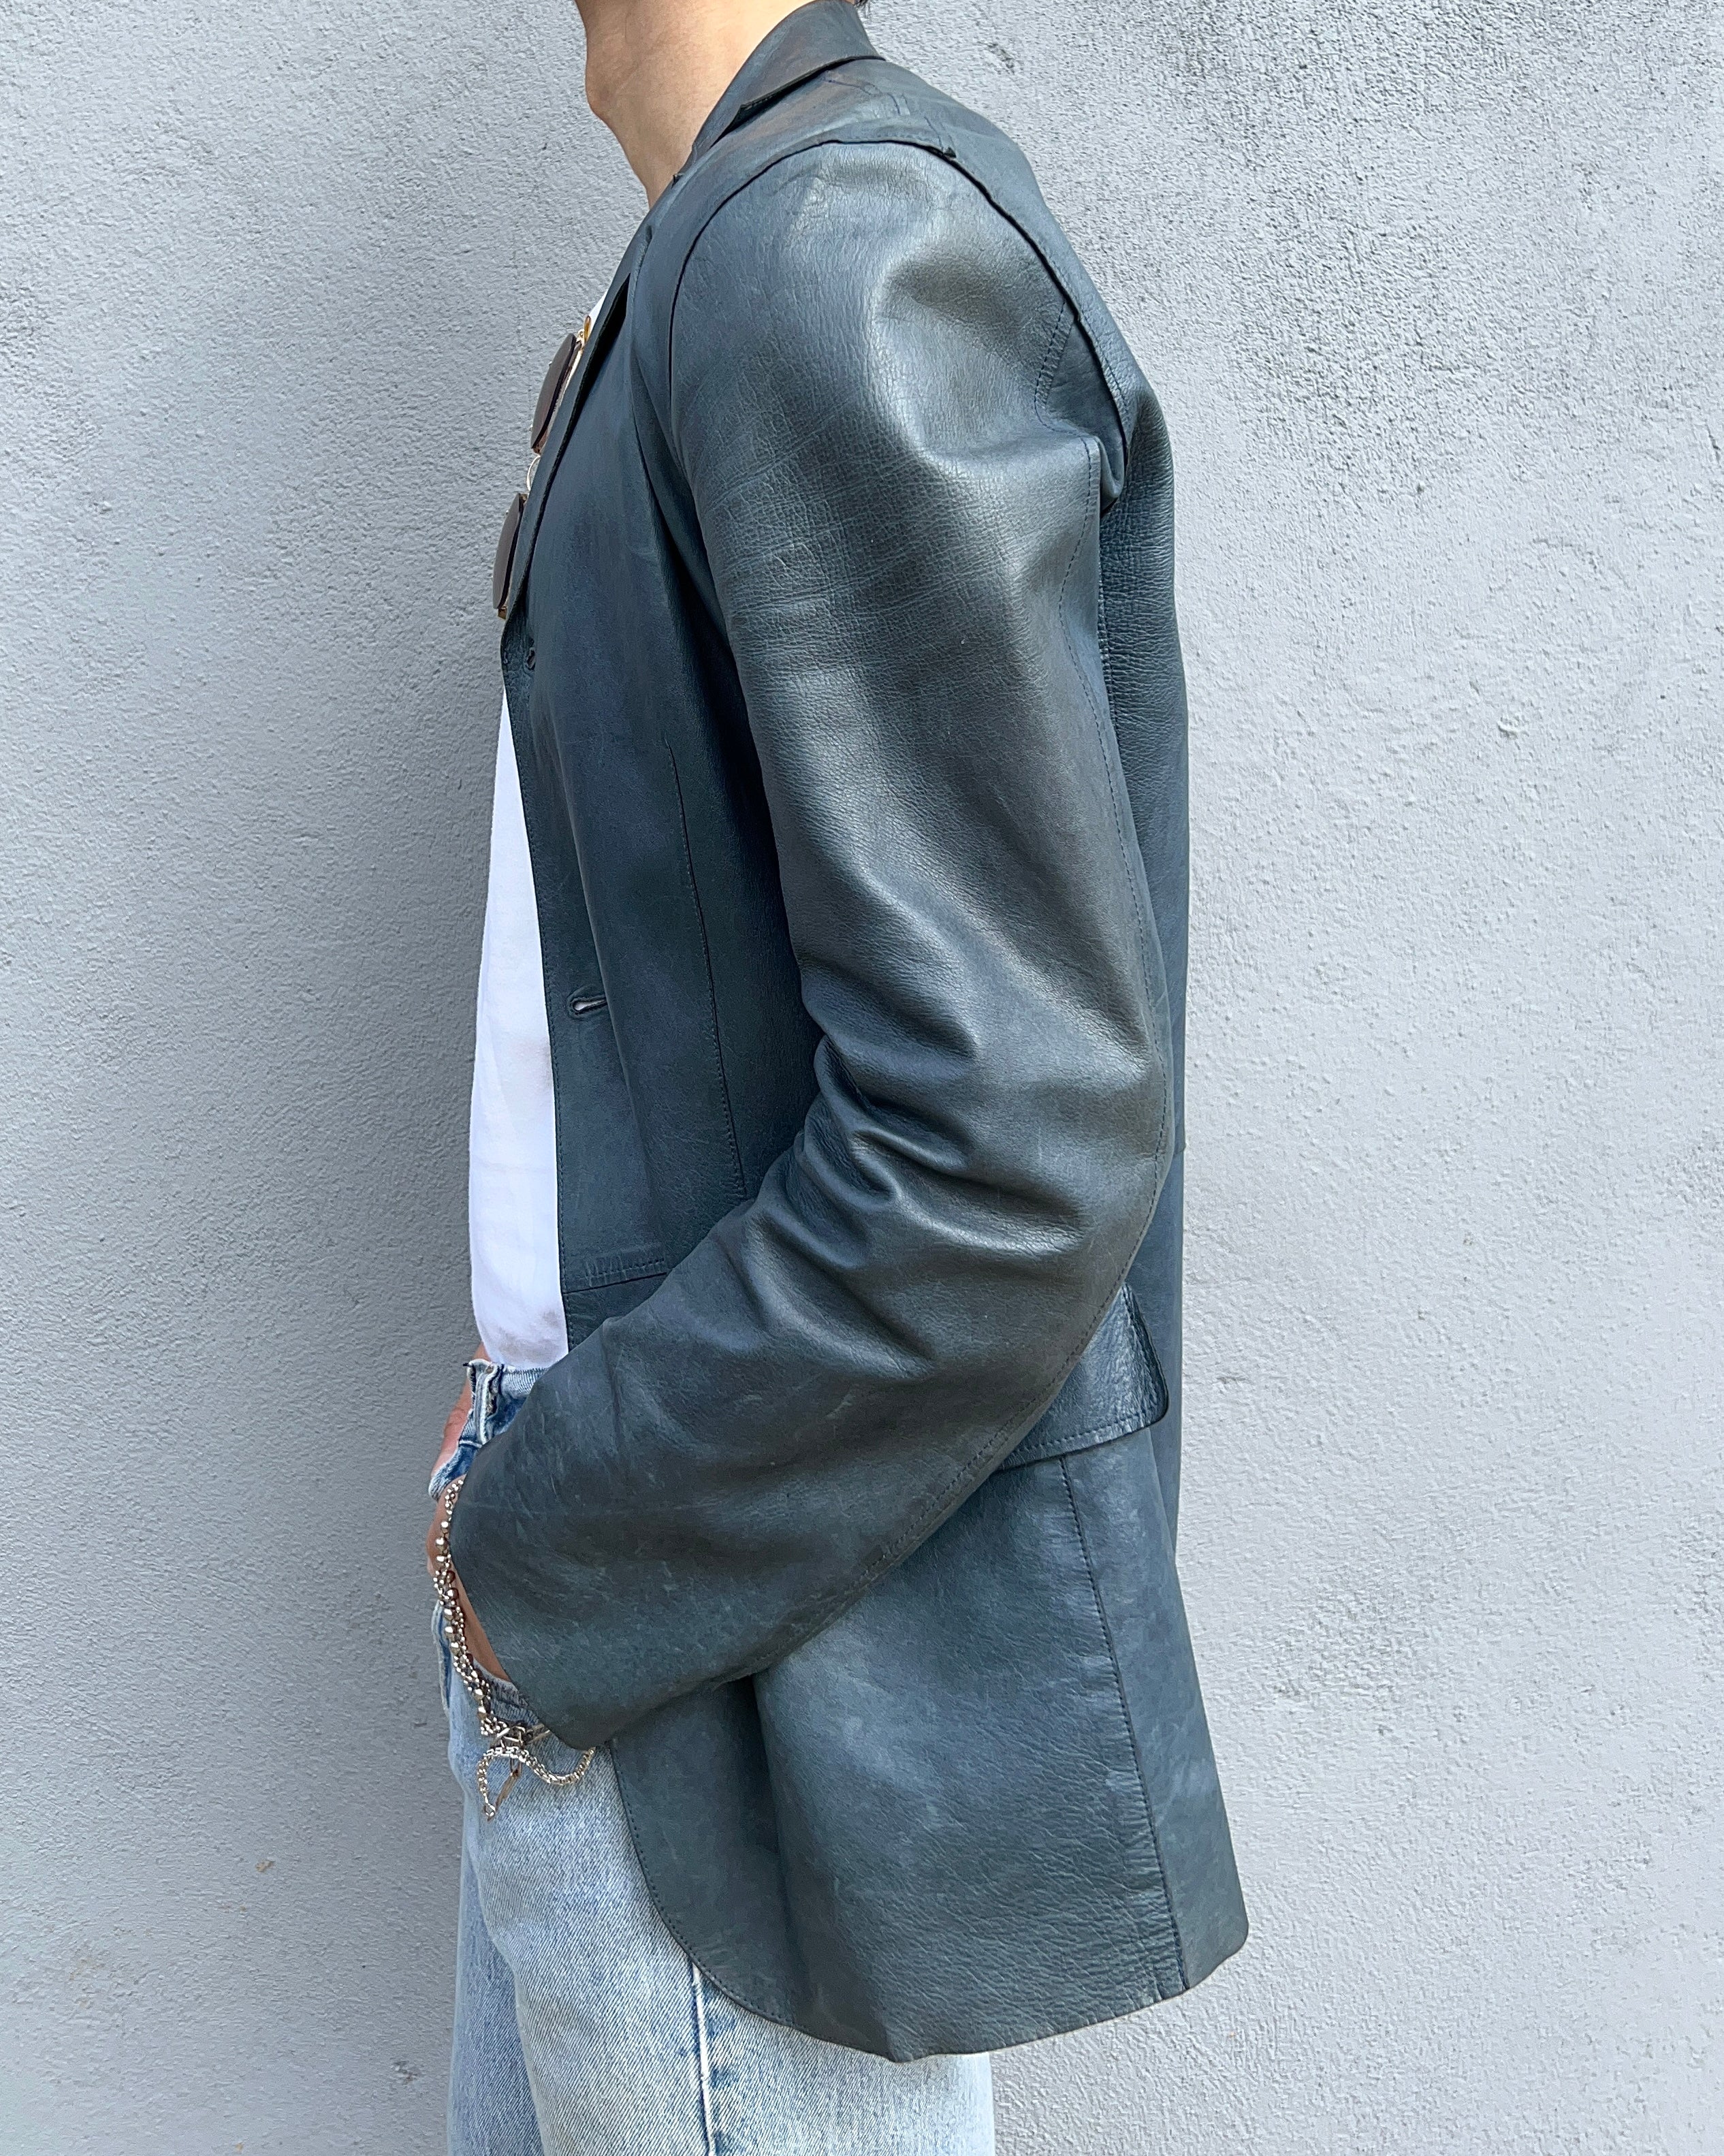 Jil Sander by Raf Simons 00s Petrol Blue Leather Jacket - Size S 